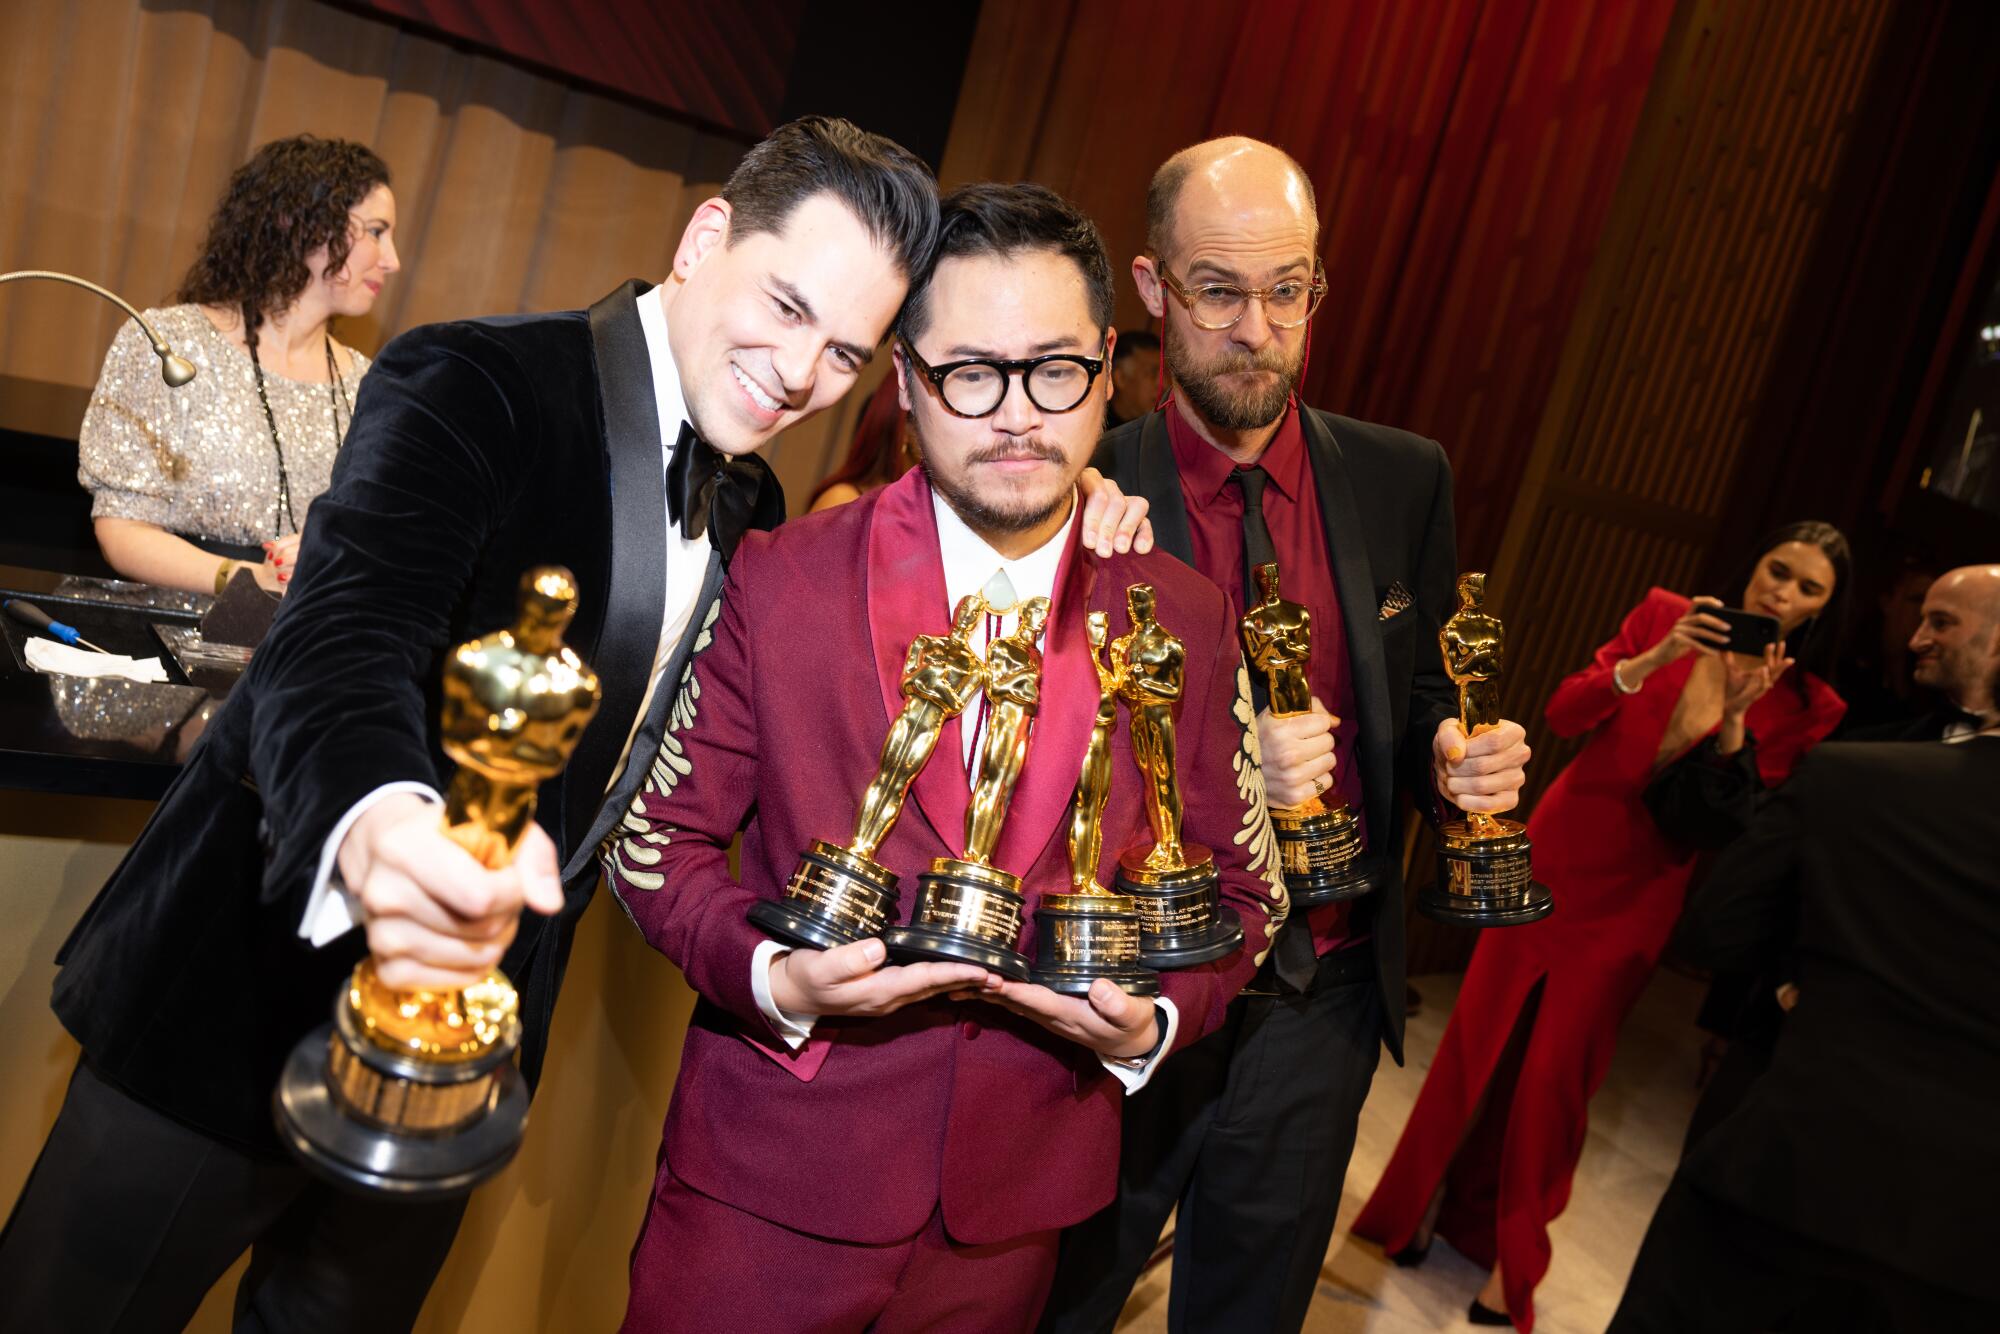 Jonathan Wang, Daniel Kwan and Daniel Scheinert balance all their Oscars.